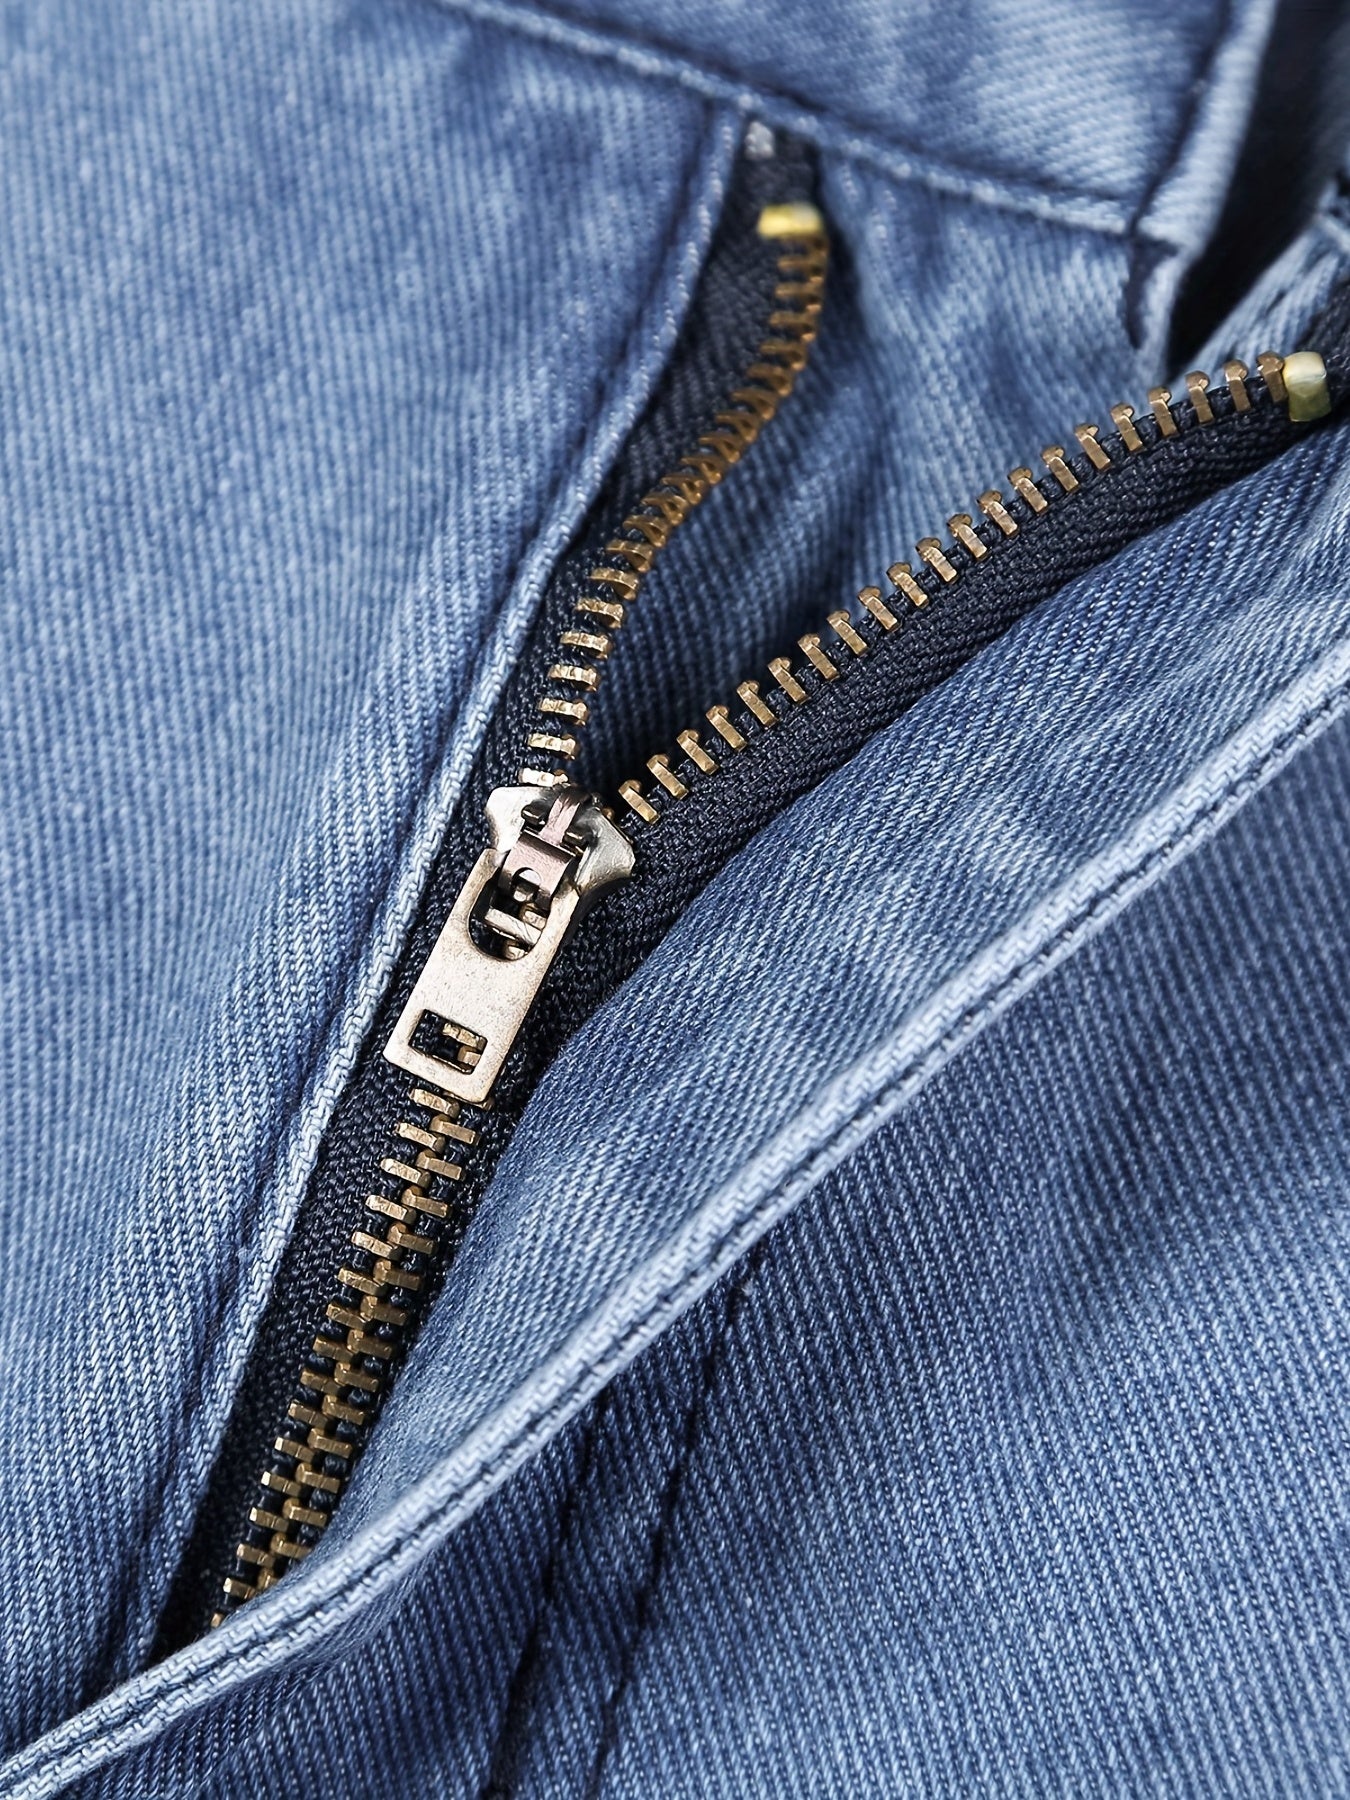 「binfenxie」Blue High Waist Straight Jeans, Loose Fit Slash Pockets Baggy Denim Pants, Women's Denim Jeans & Clothing